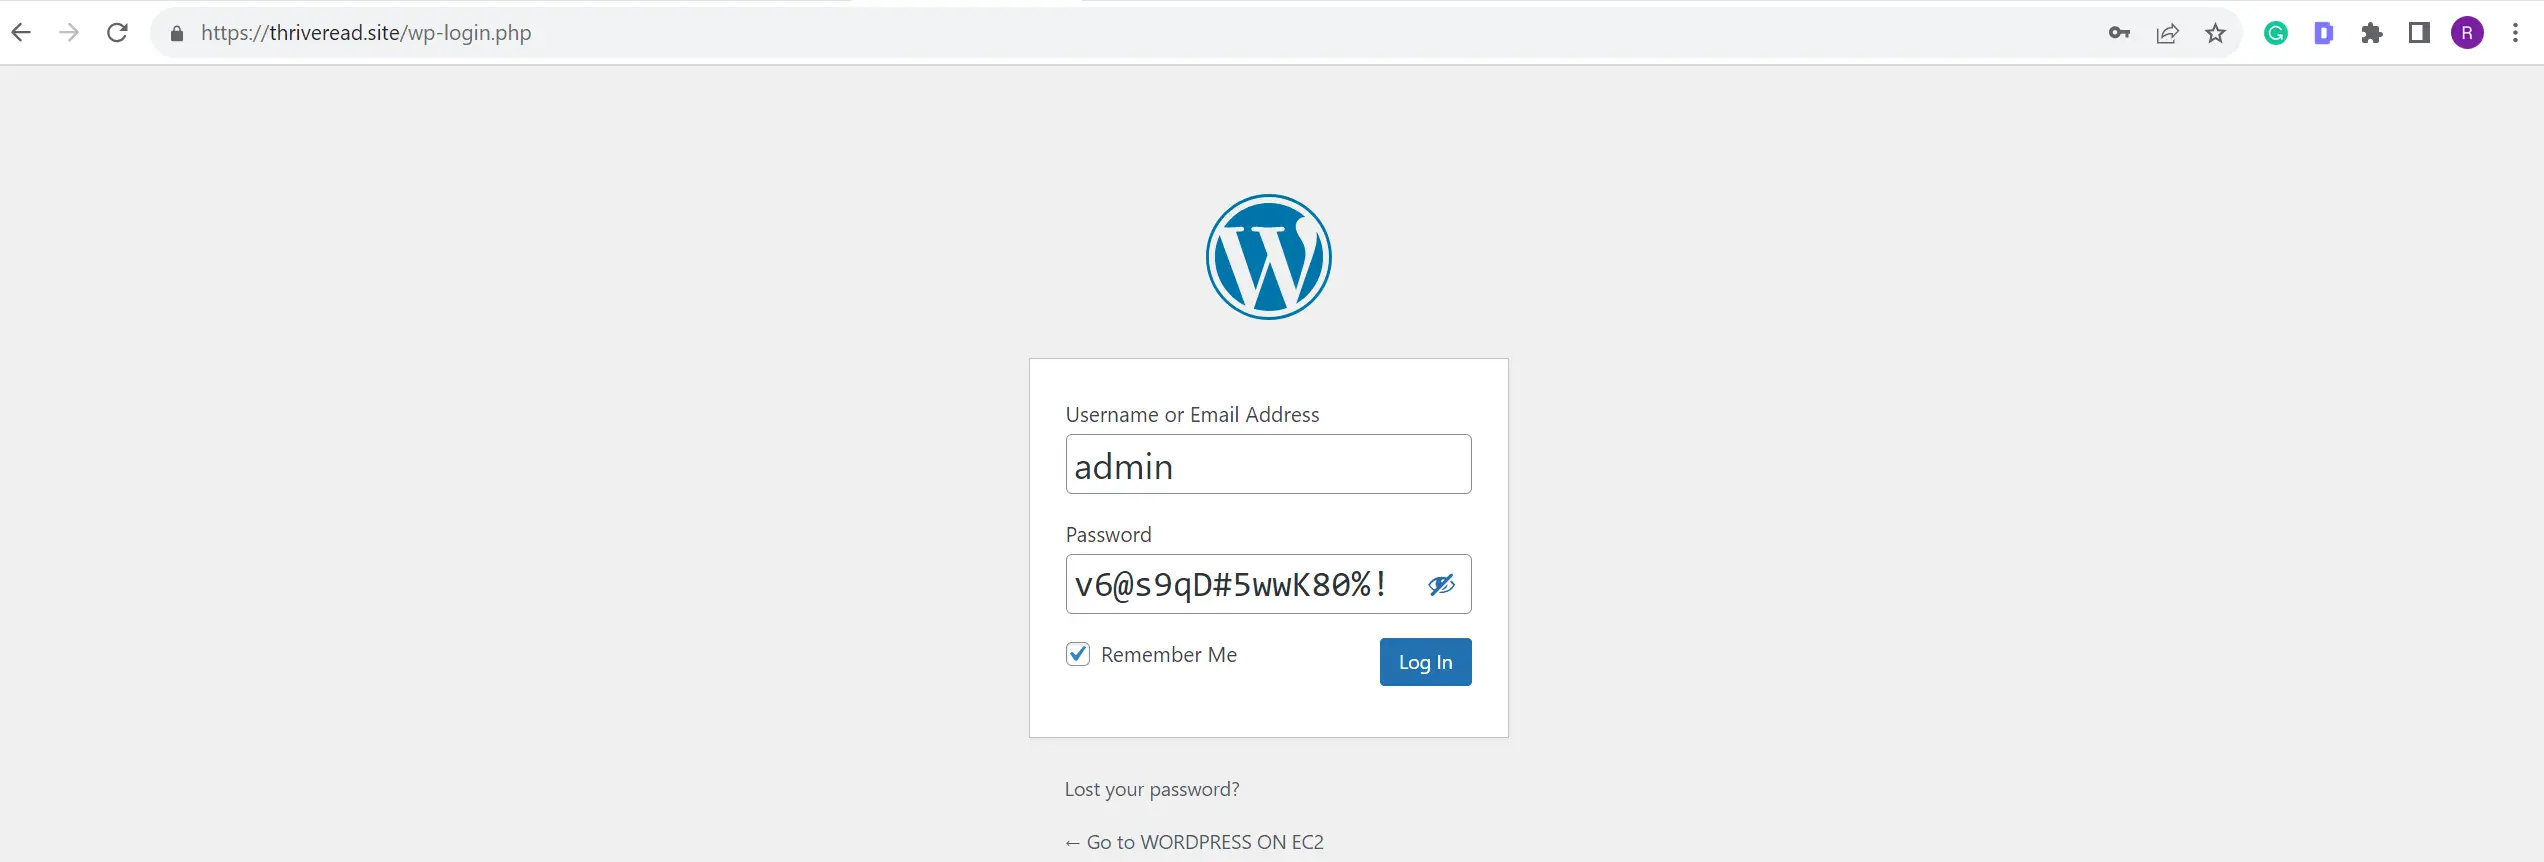 Host WordPress on AWS EC2 Ubuntu AMI with SSL Domain Name